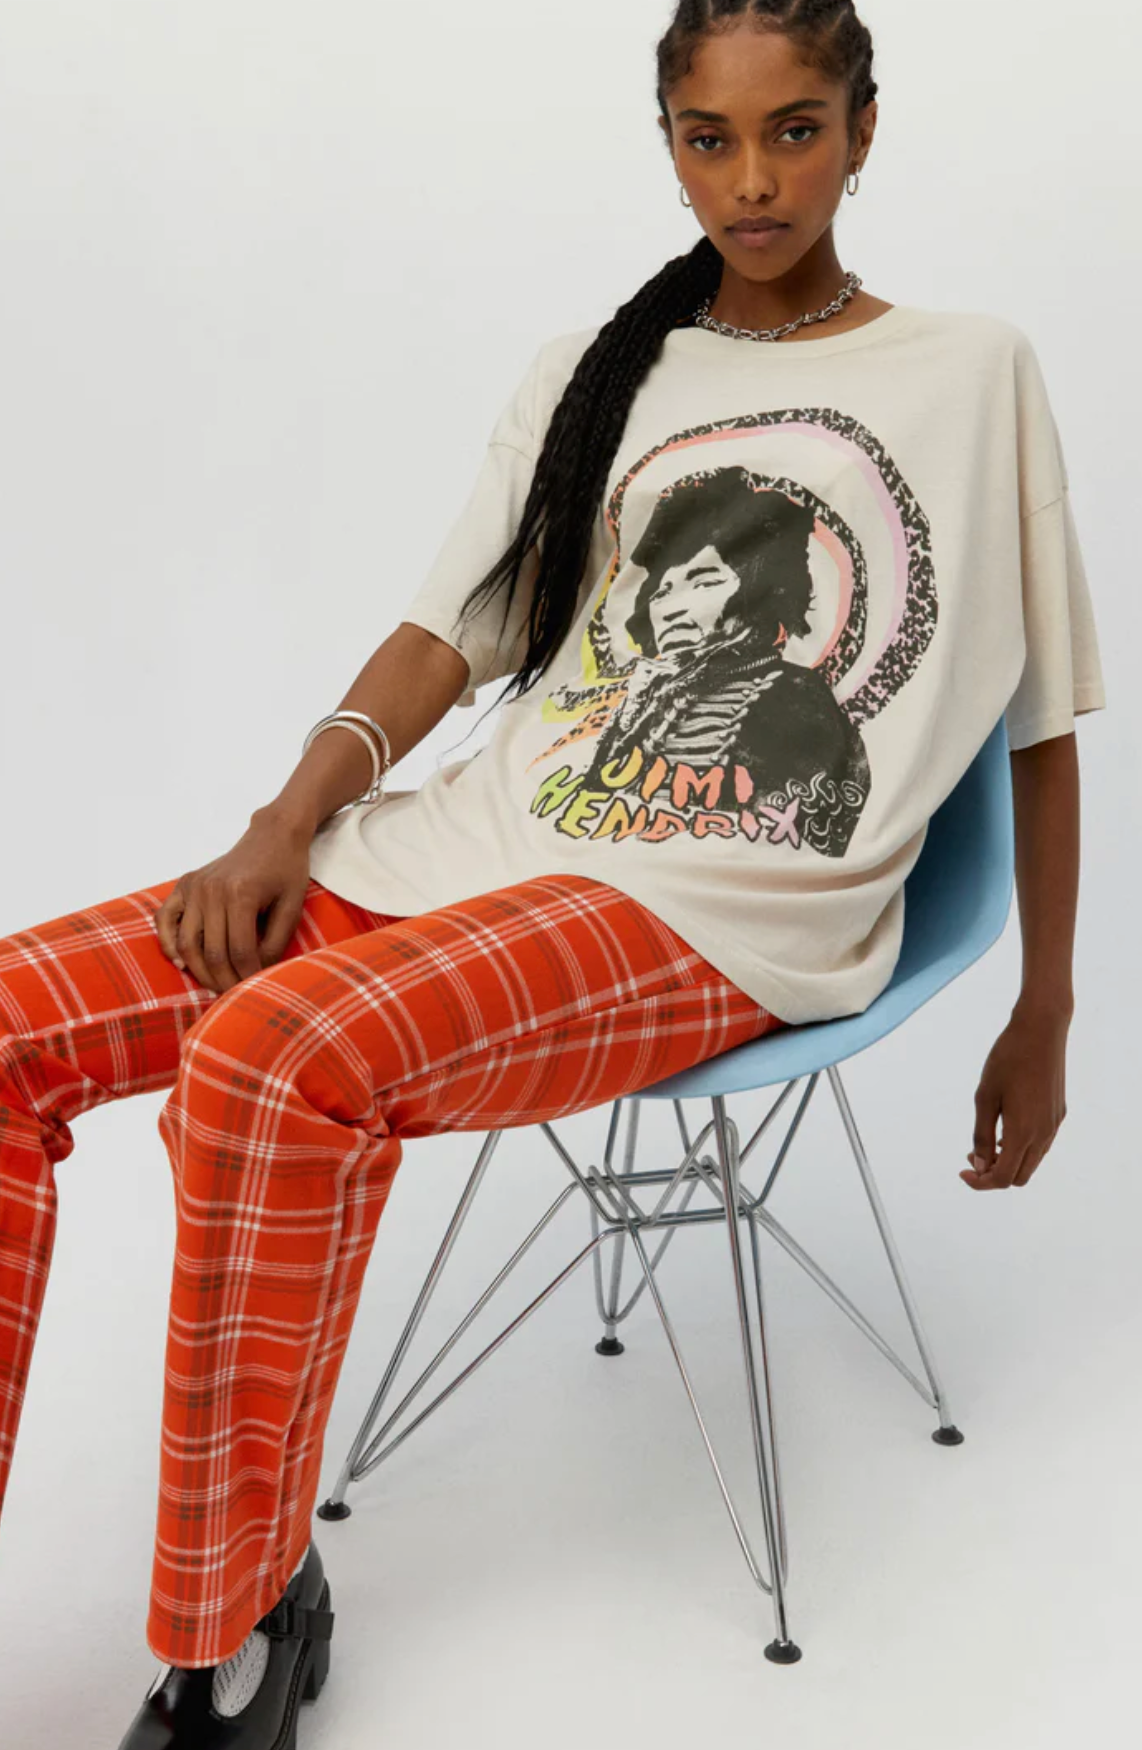 Jimi Hendrix Spiral Merch T-shirt